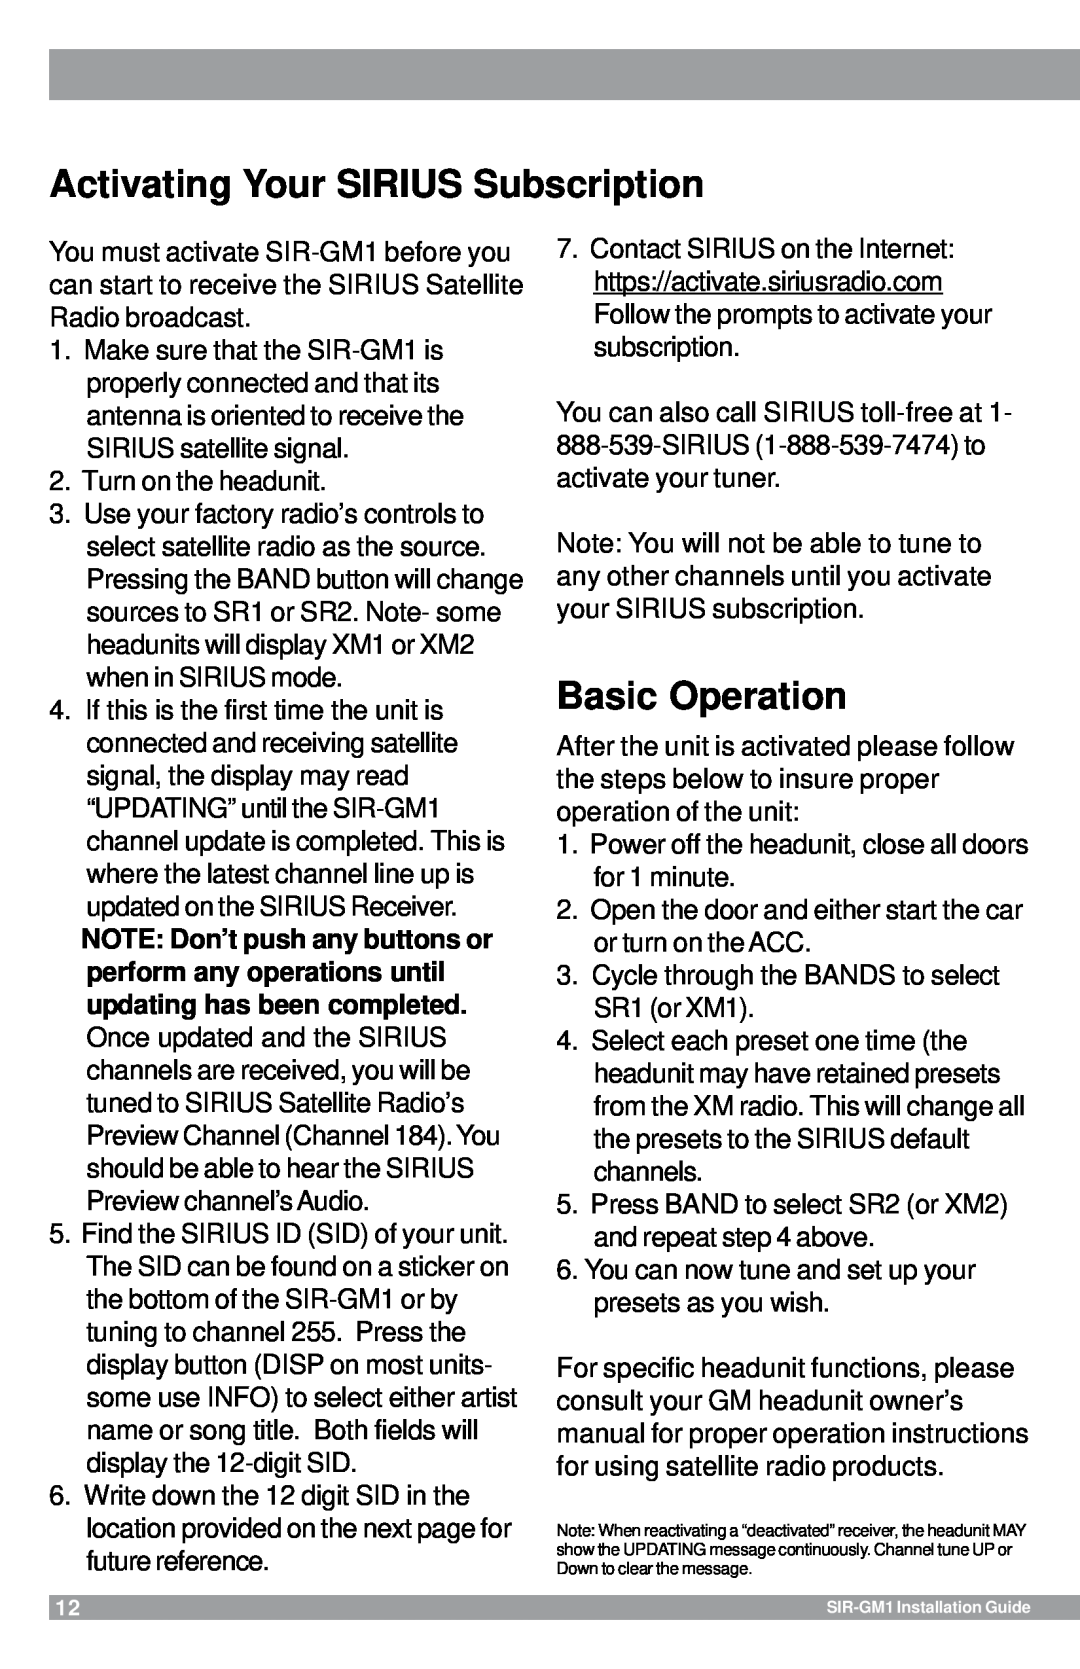 Sirius Satellite Radio SIR-GM1 manual Activating Your SIRIUS Subscription, Basic Operation 